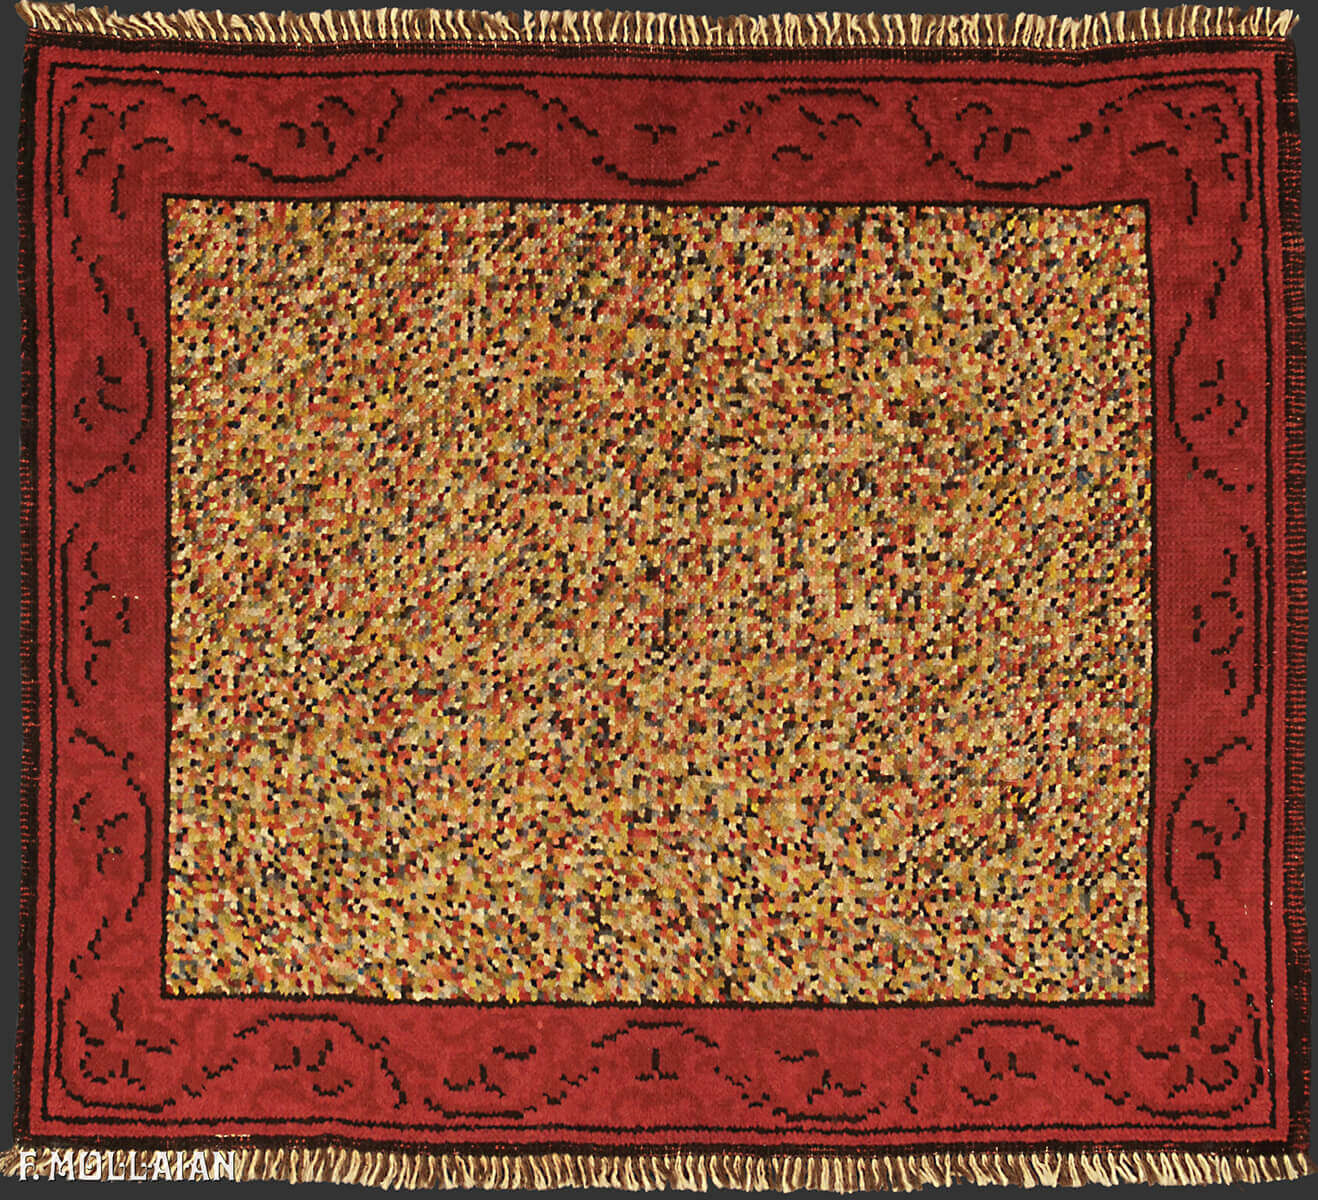 Teppich Antiker Europäischer n°:17680018